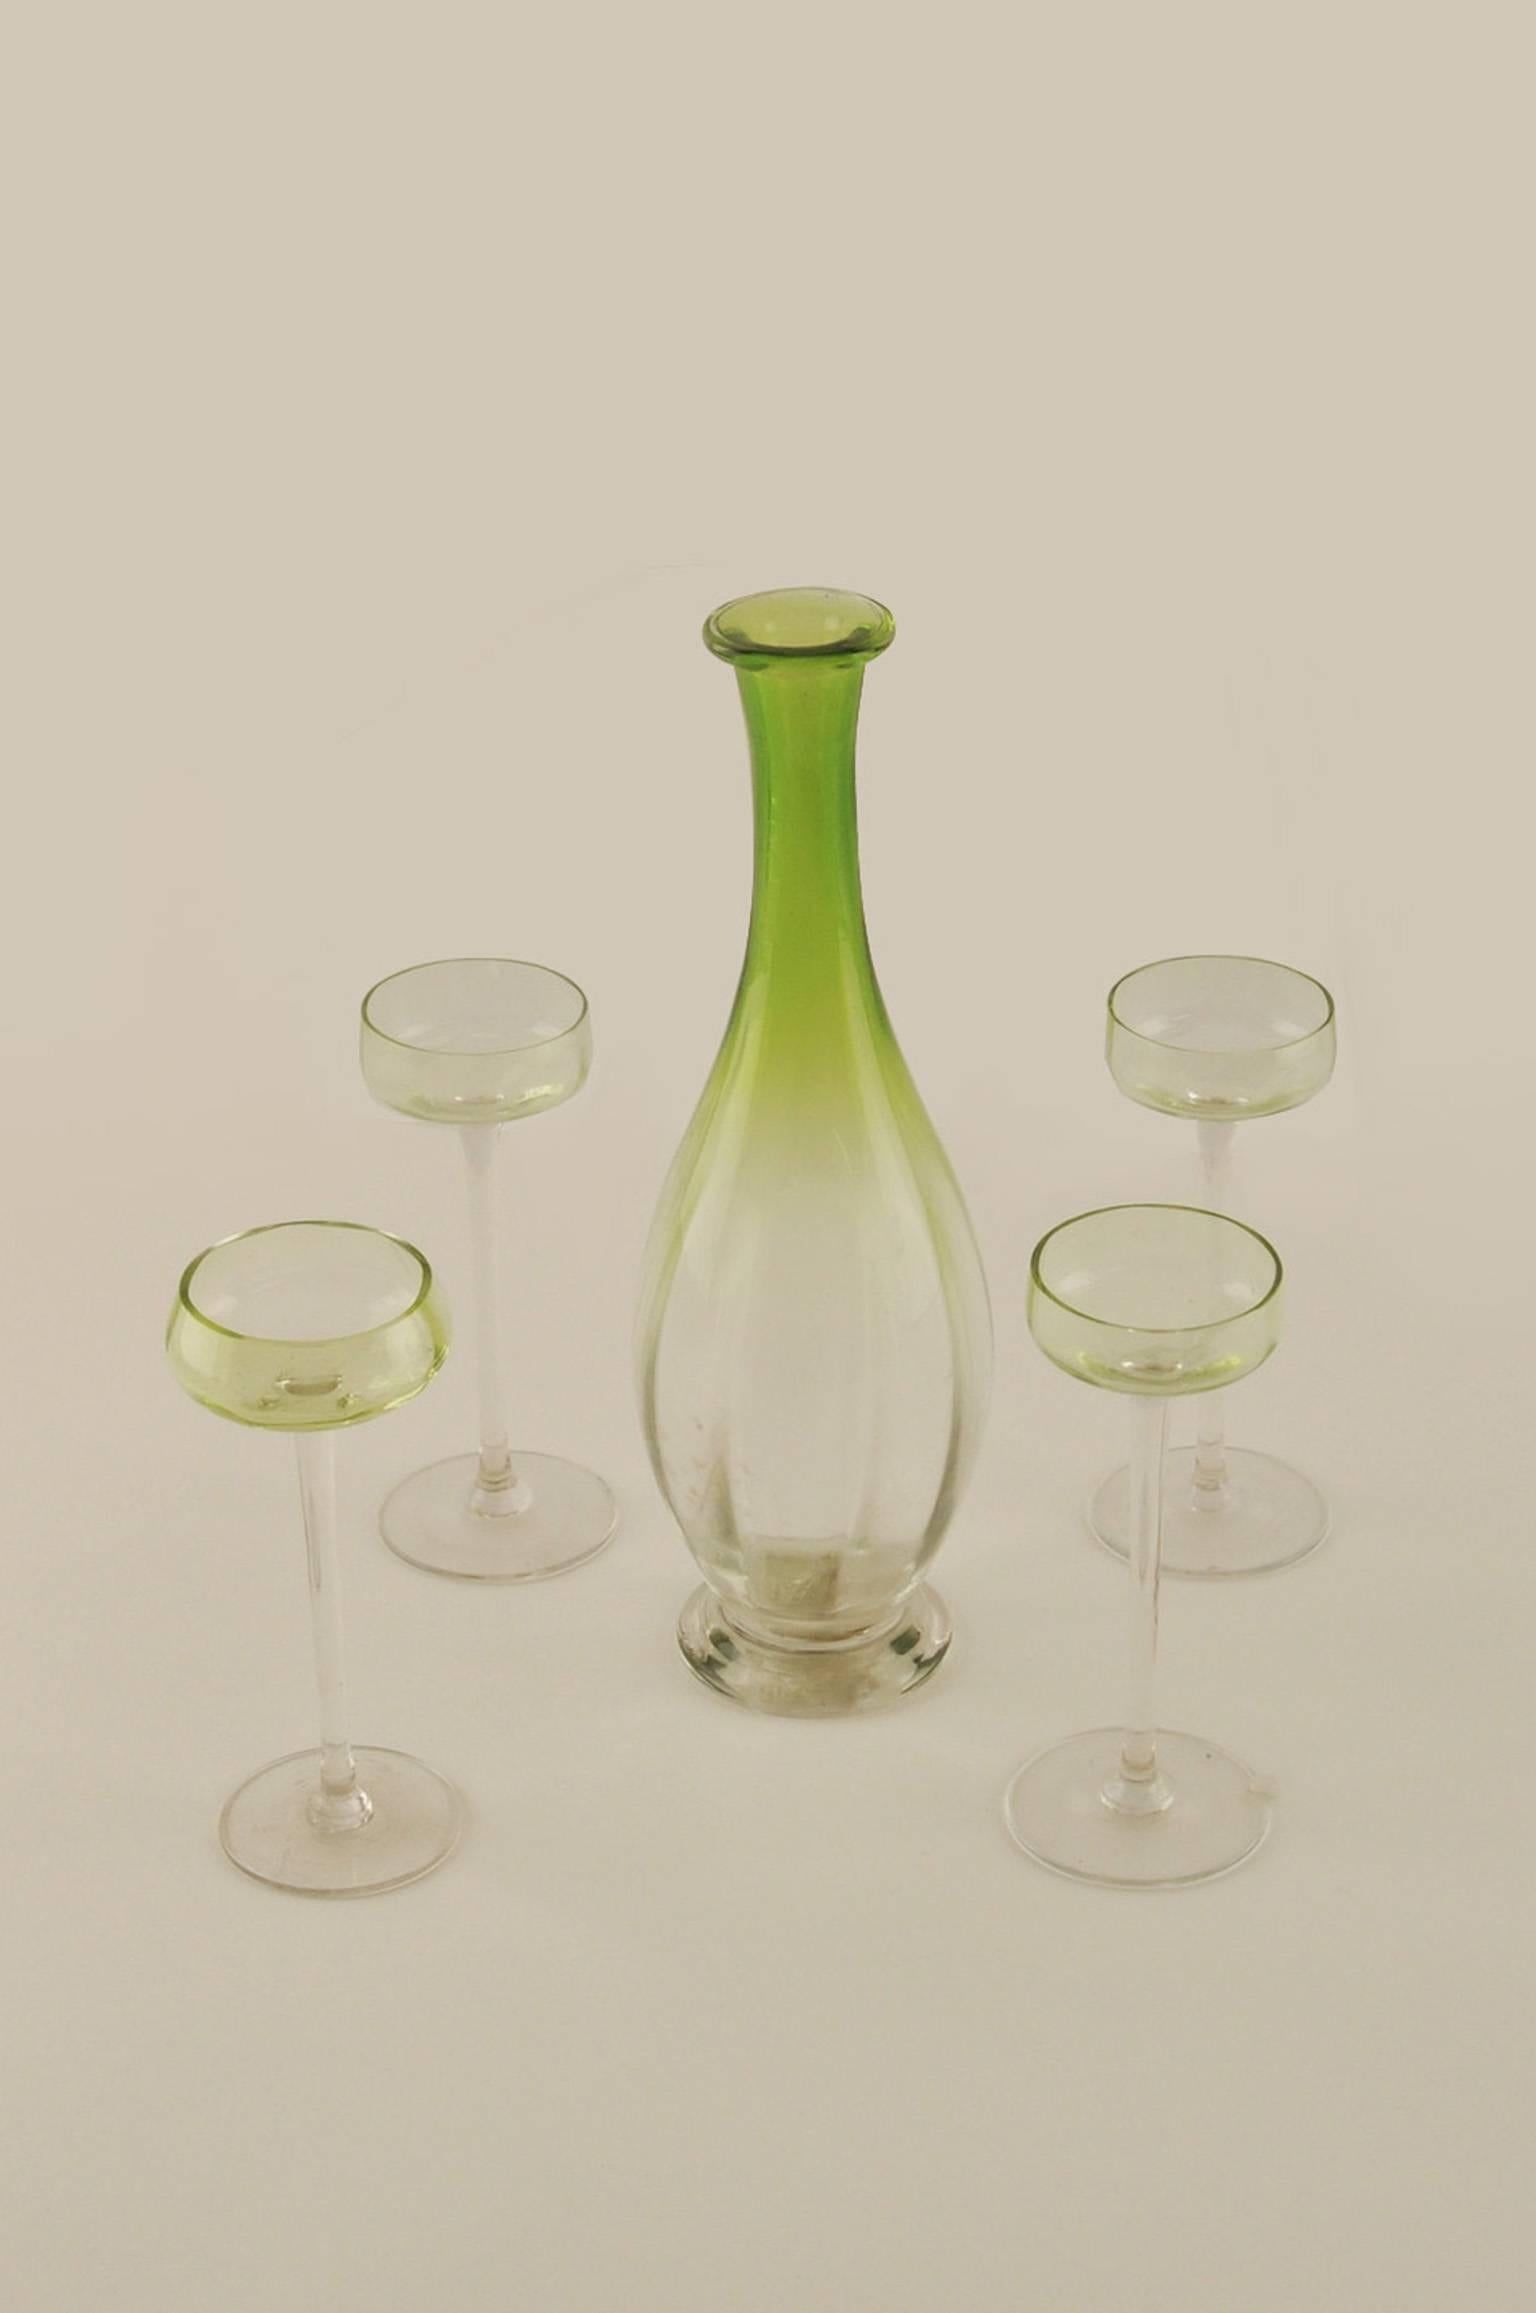 glass jug and glasses set